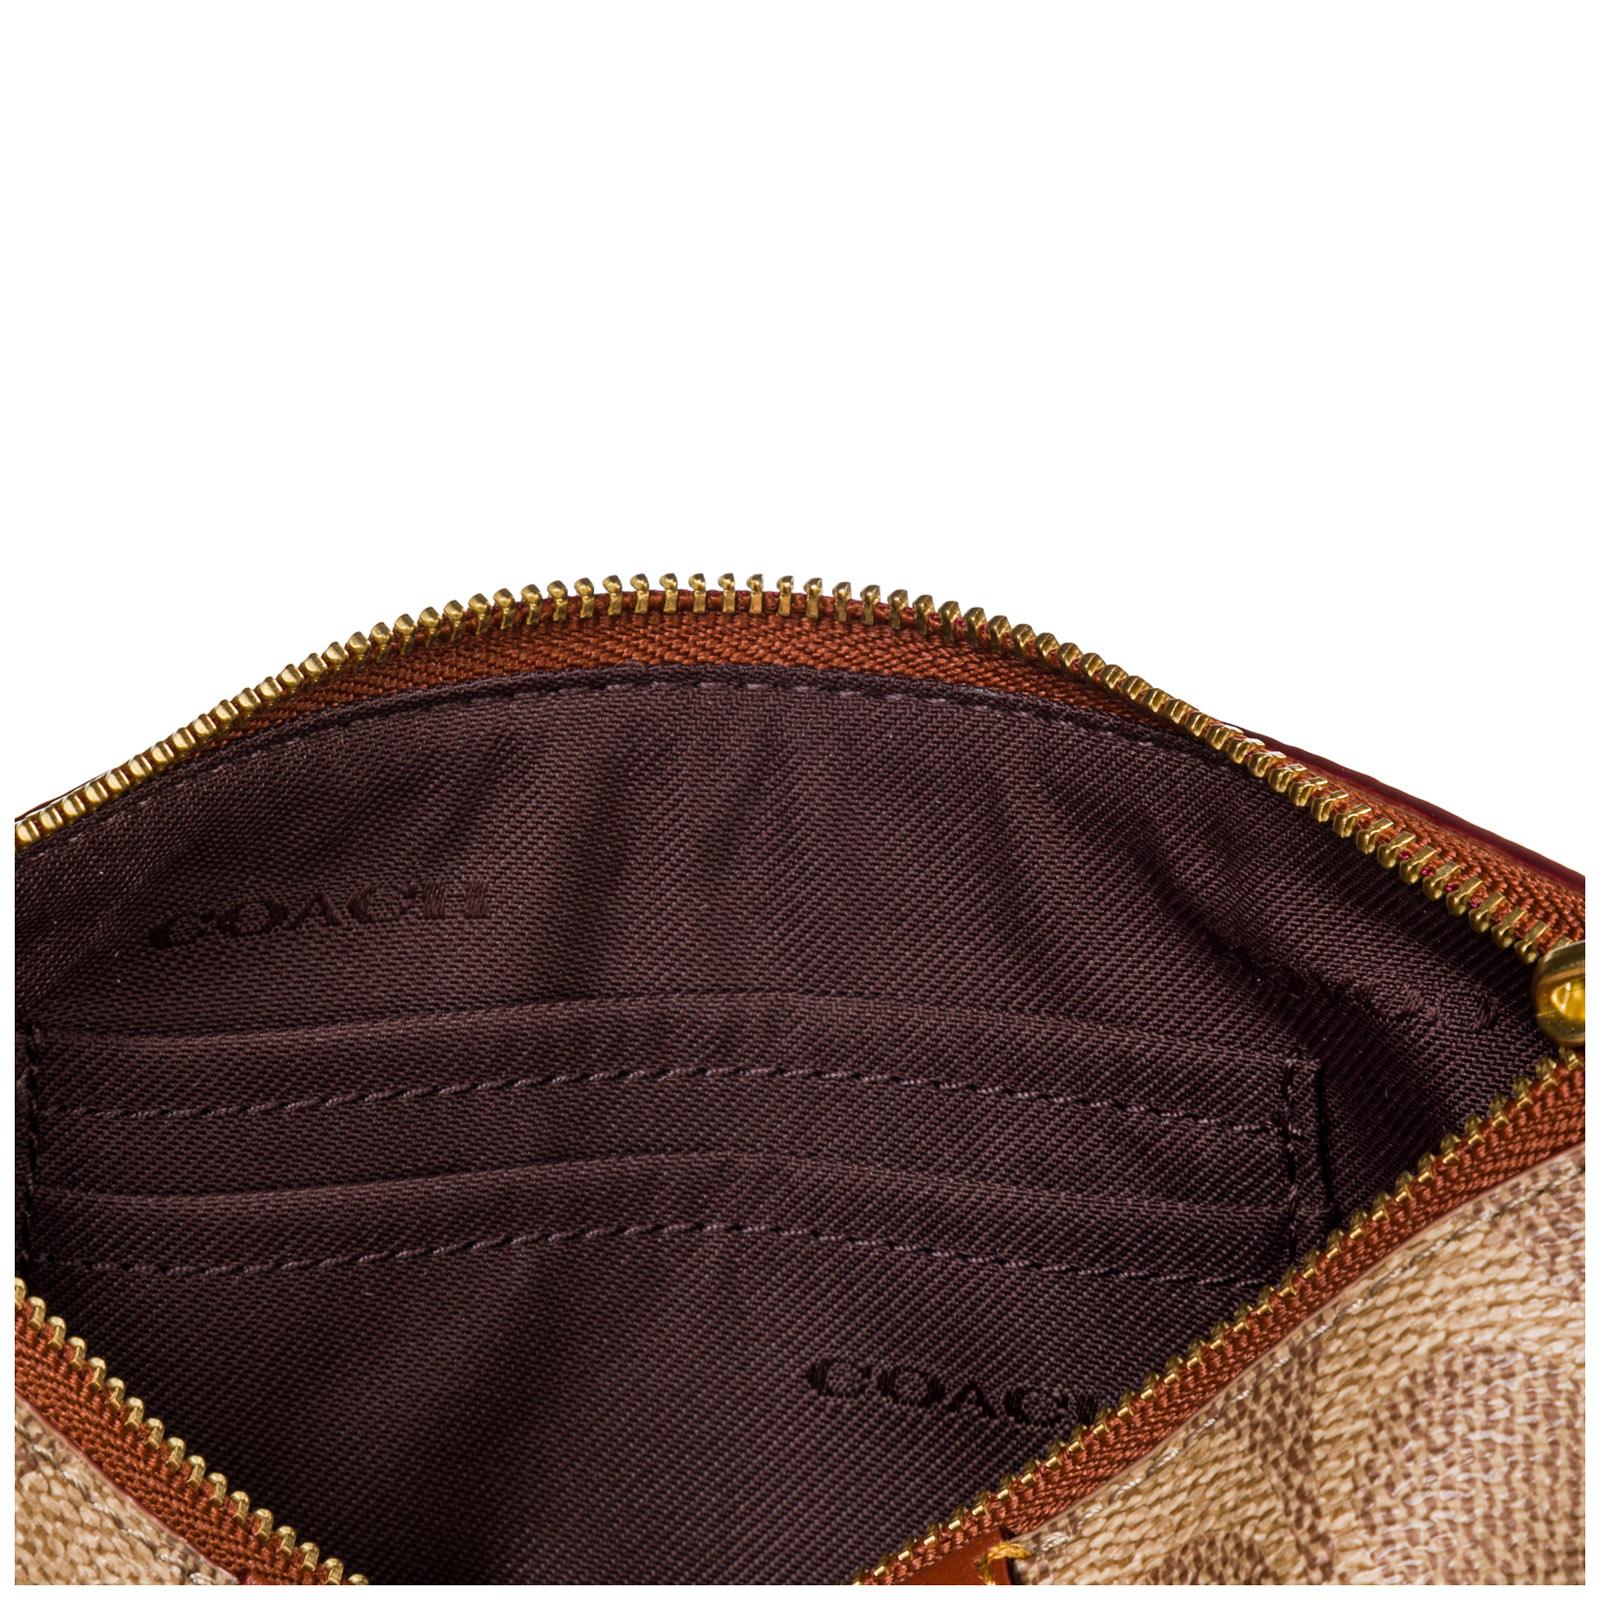 COACH Women's Leather Clutch Handbag Bag Purse in Brown